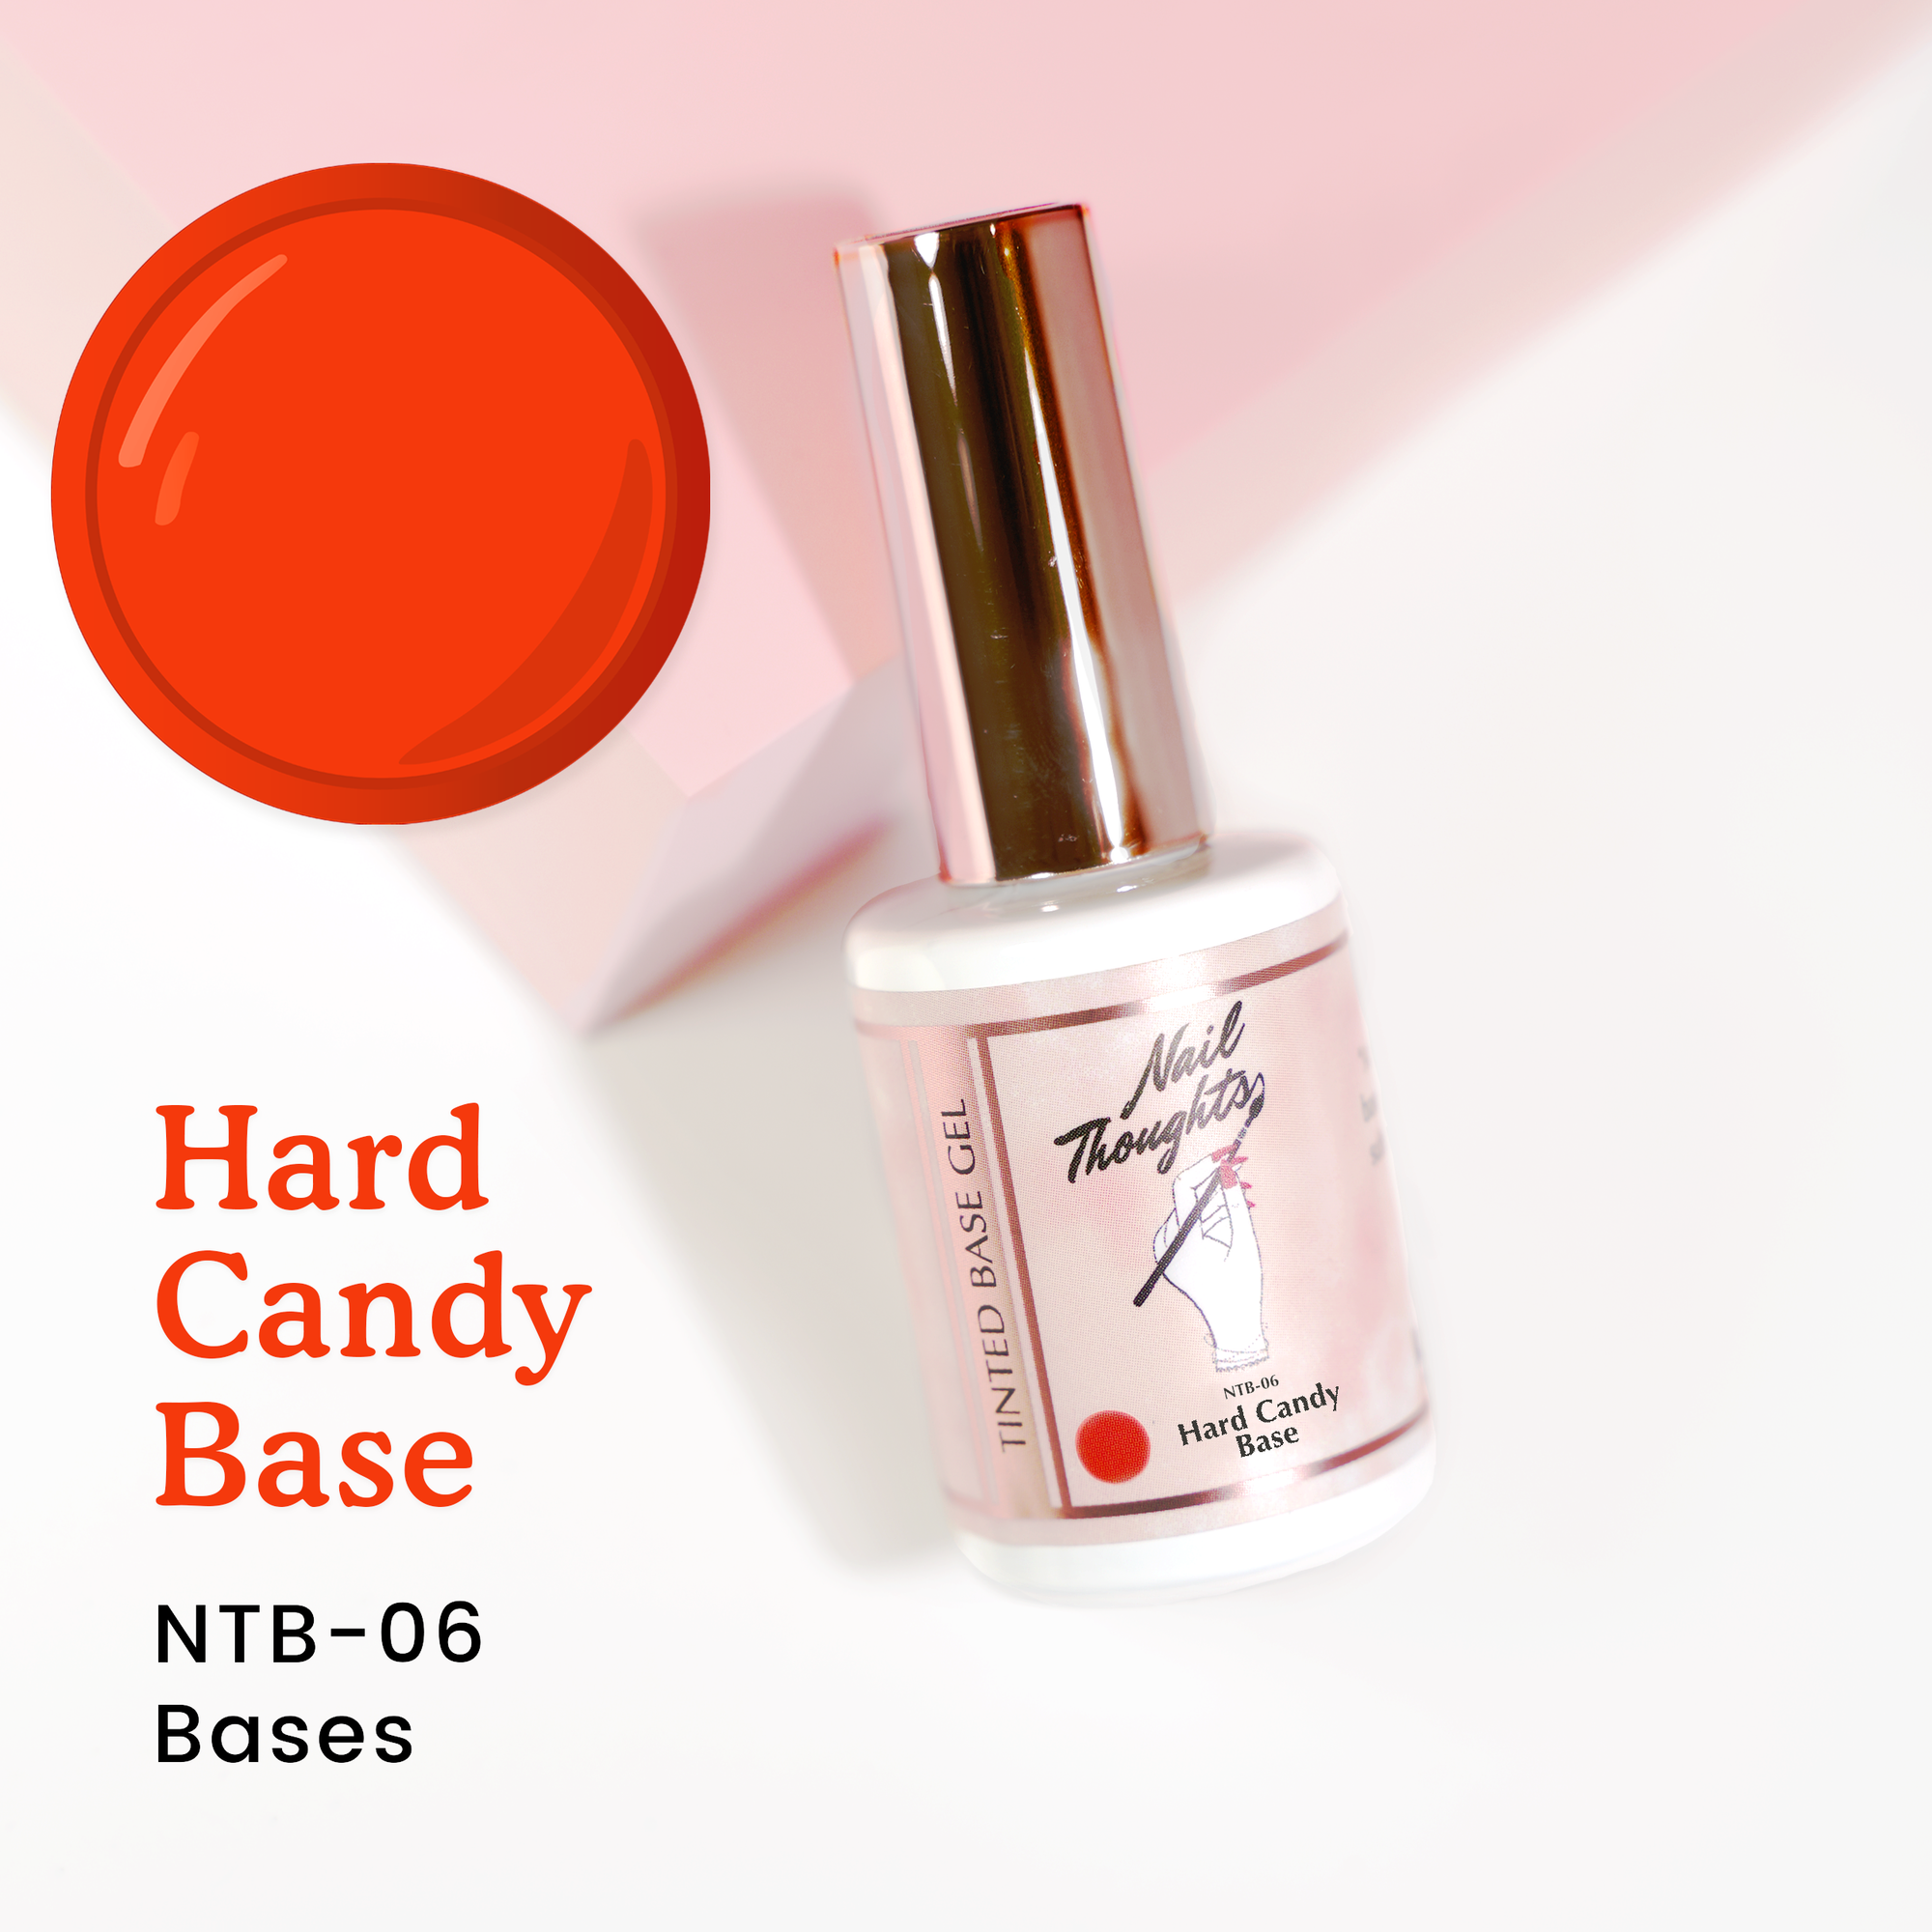 Hard Candy Base NTB-06